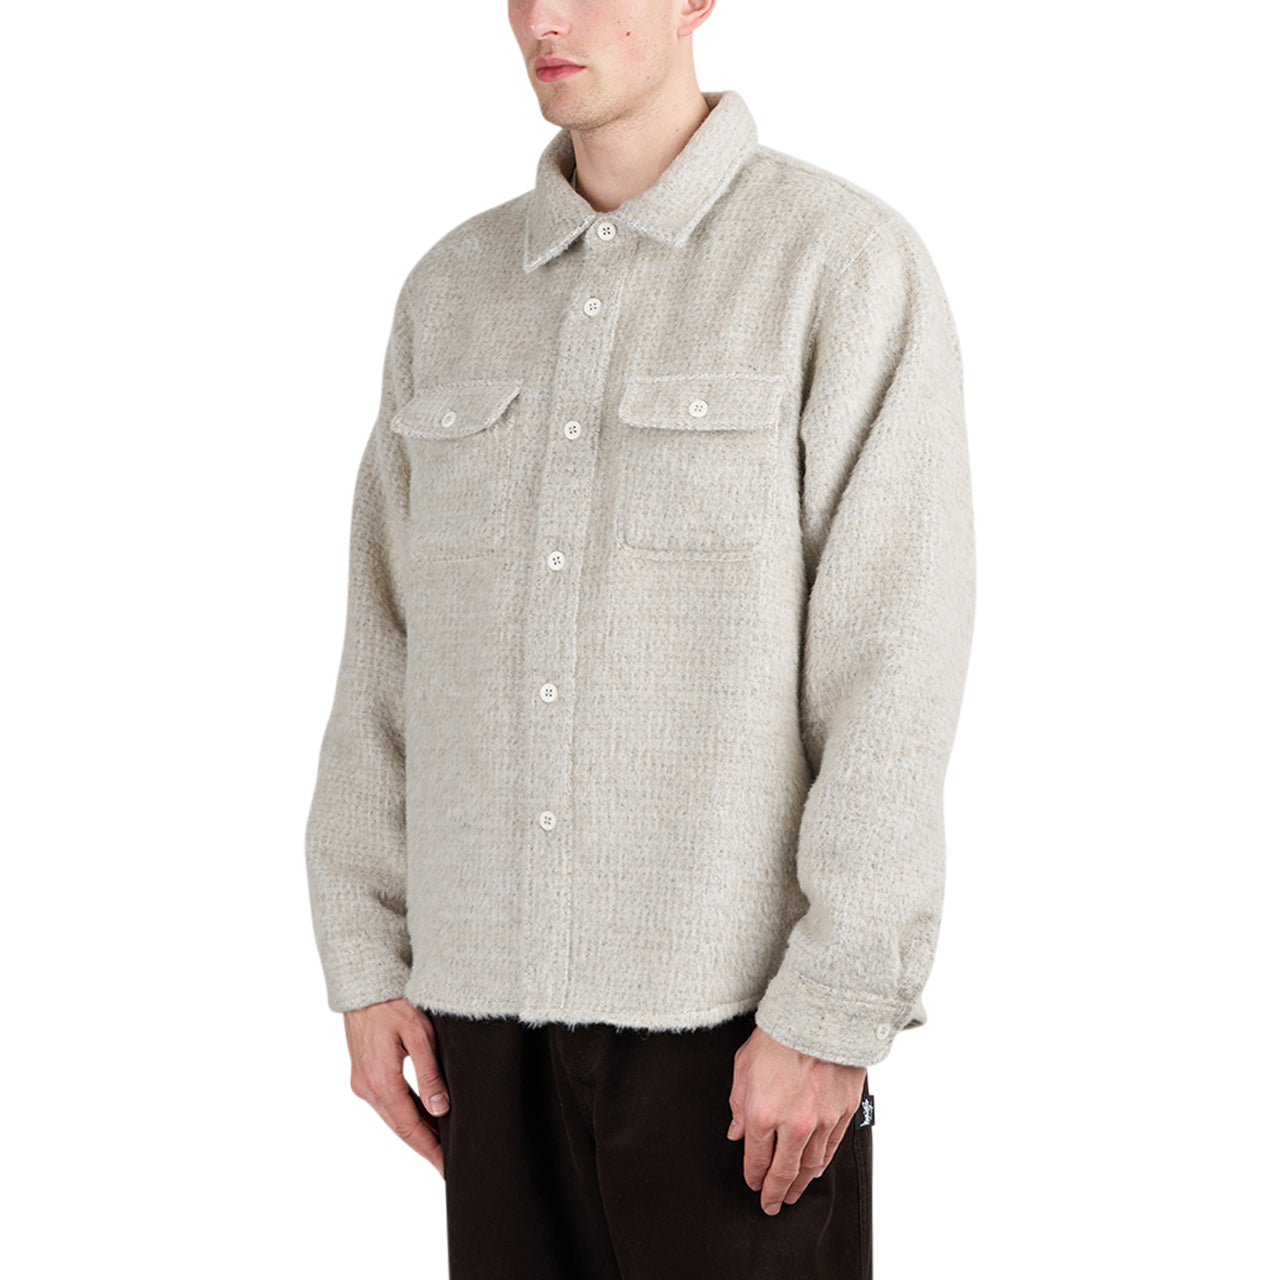 Stüssy Speckled Wool CPO Shirt (Beige)  - Allike Store